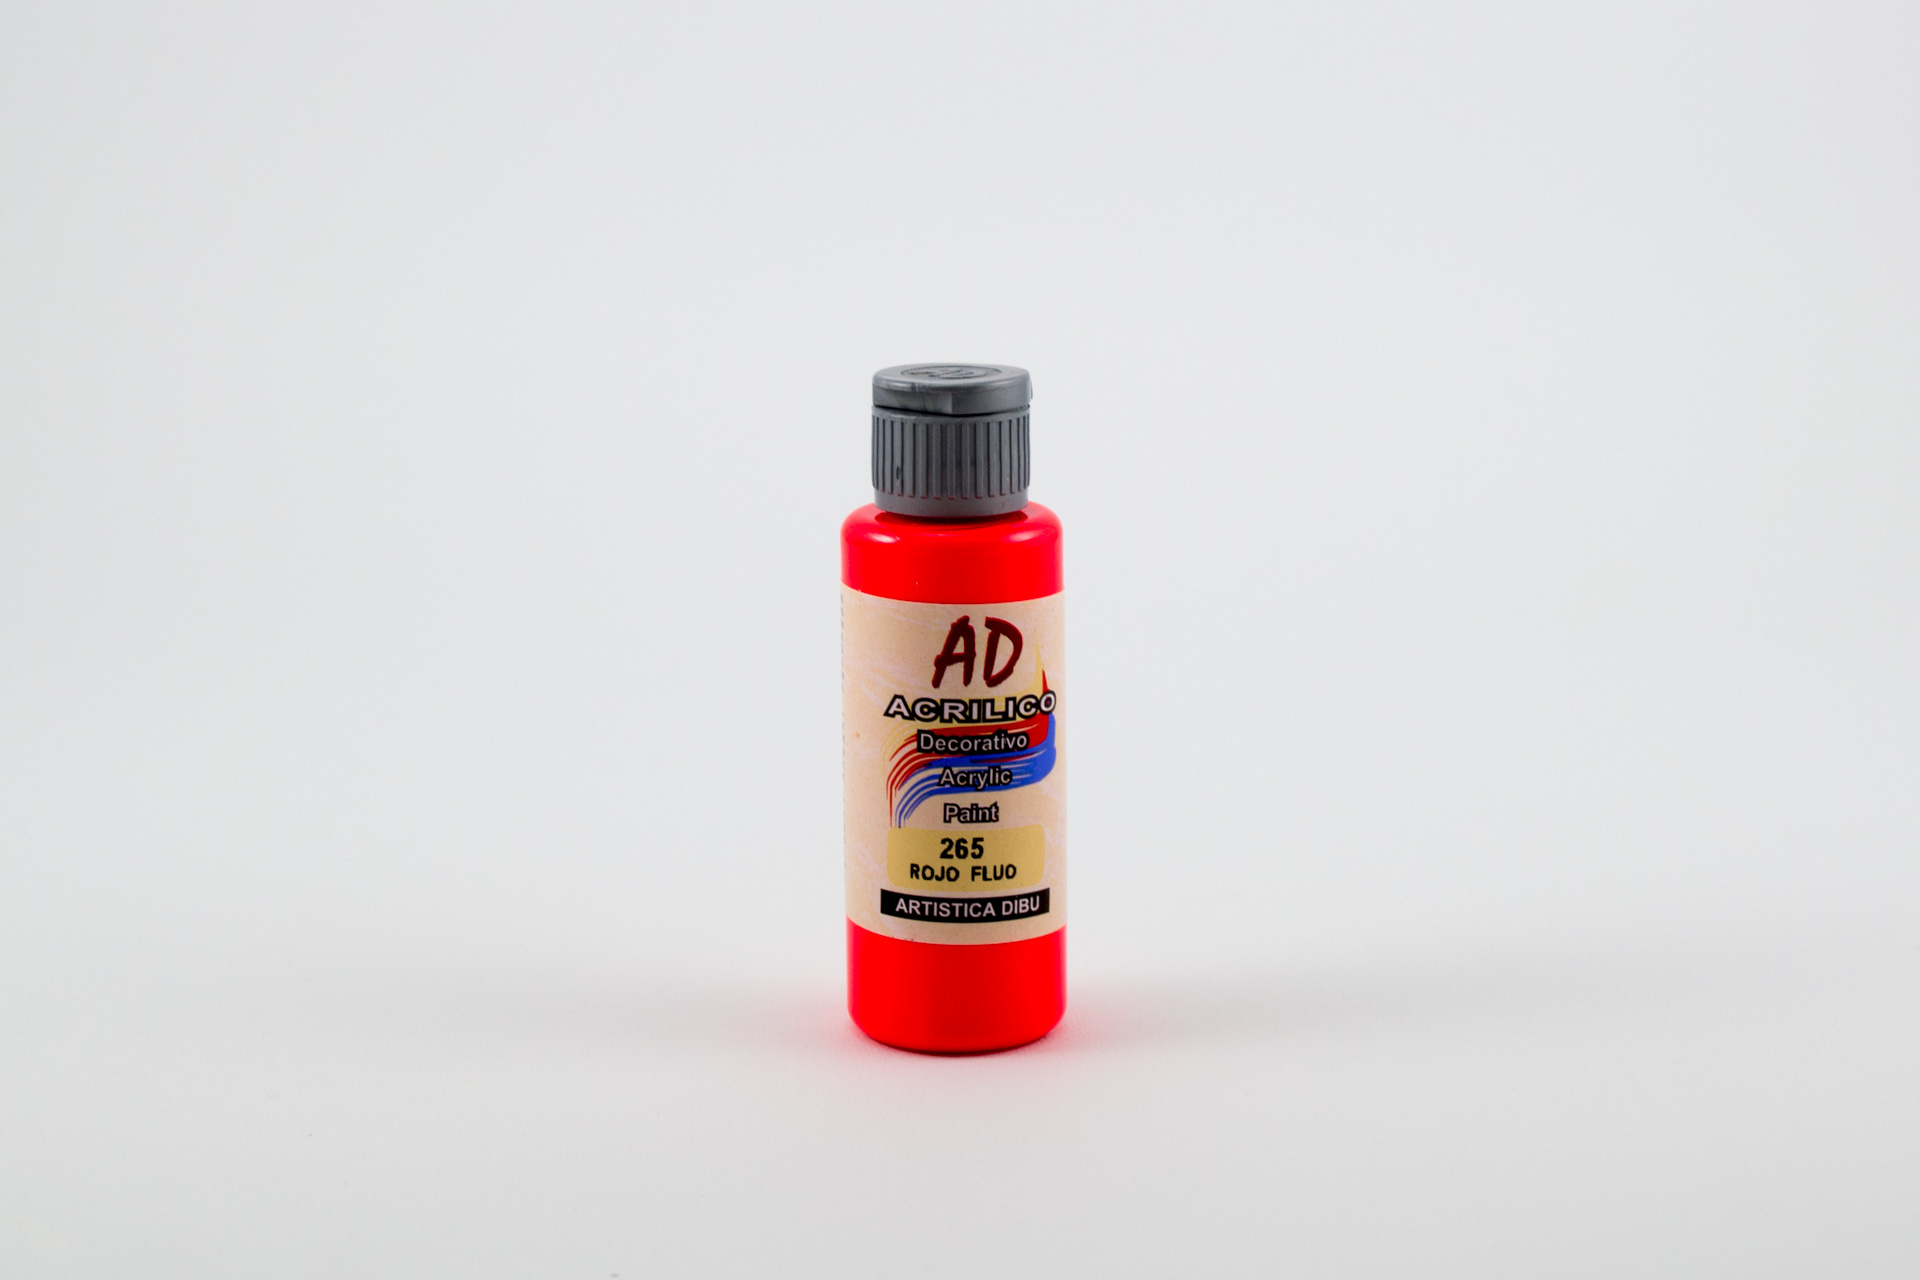 Acrilicos ad 265 - rojo fluo x 60 ml.